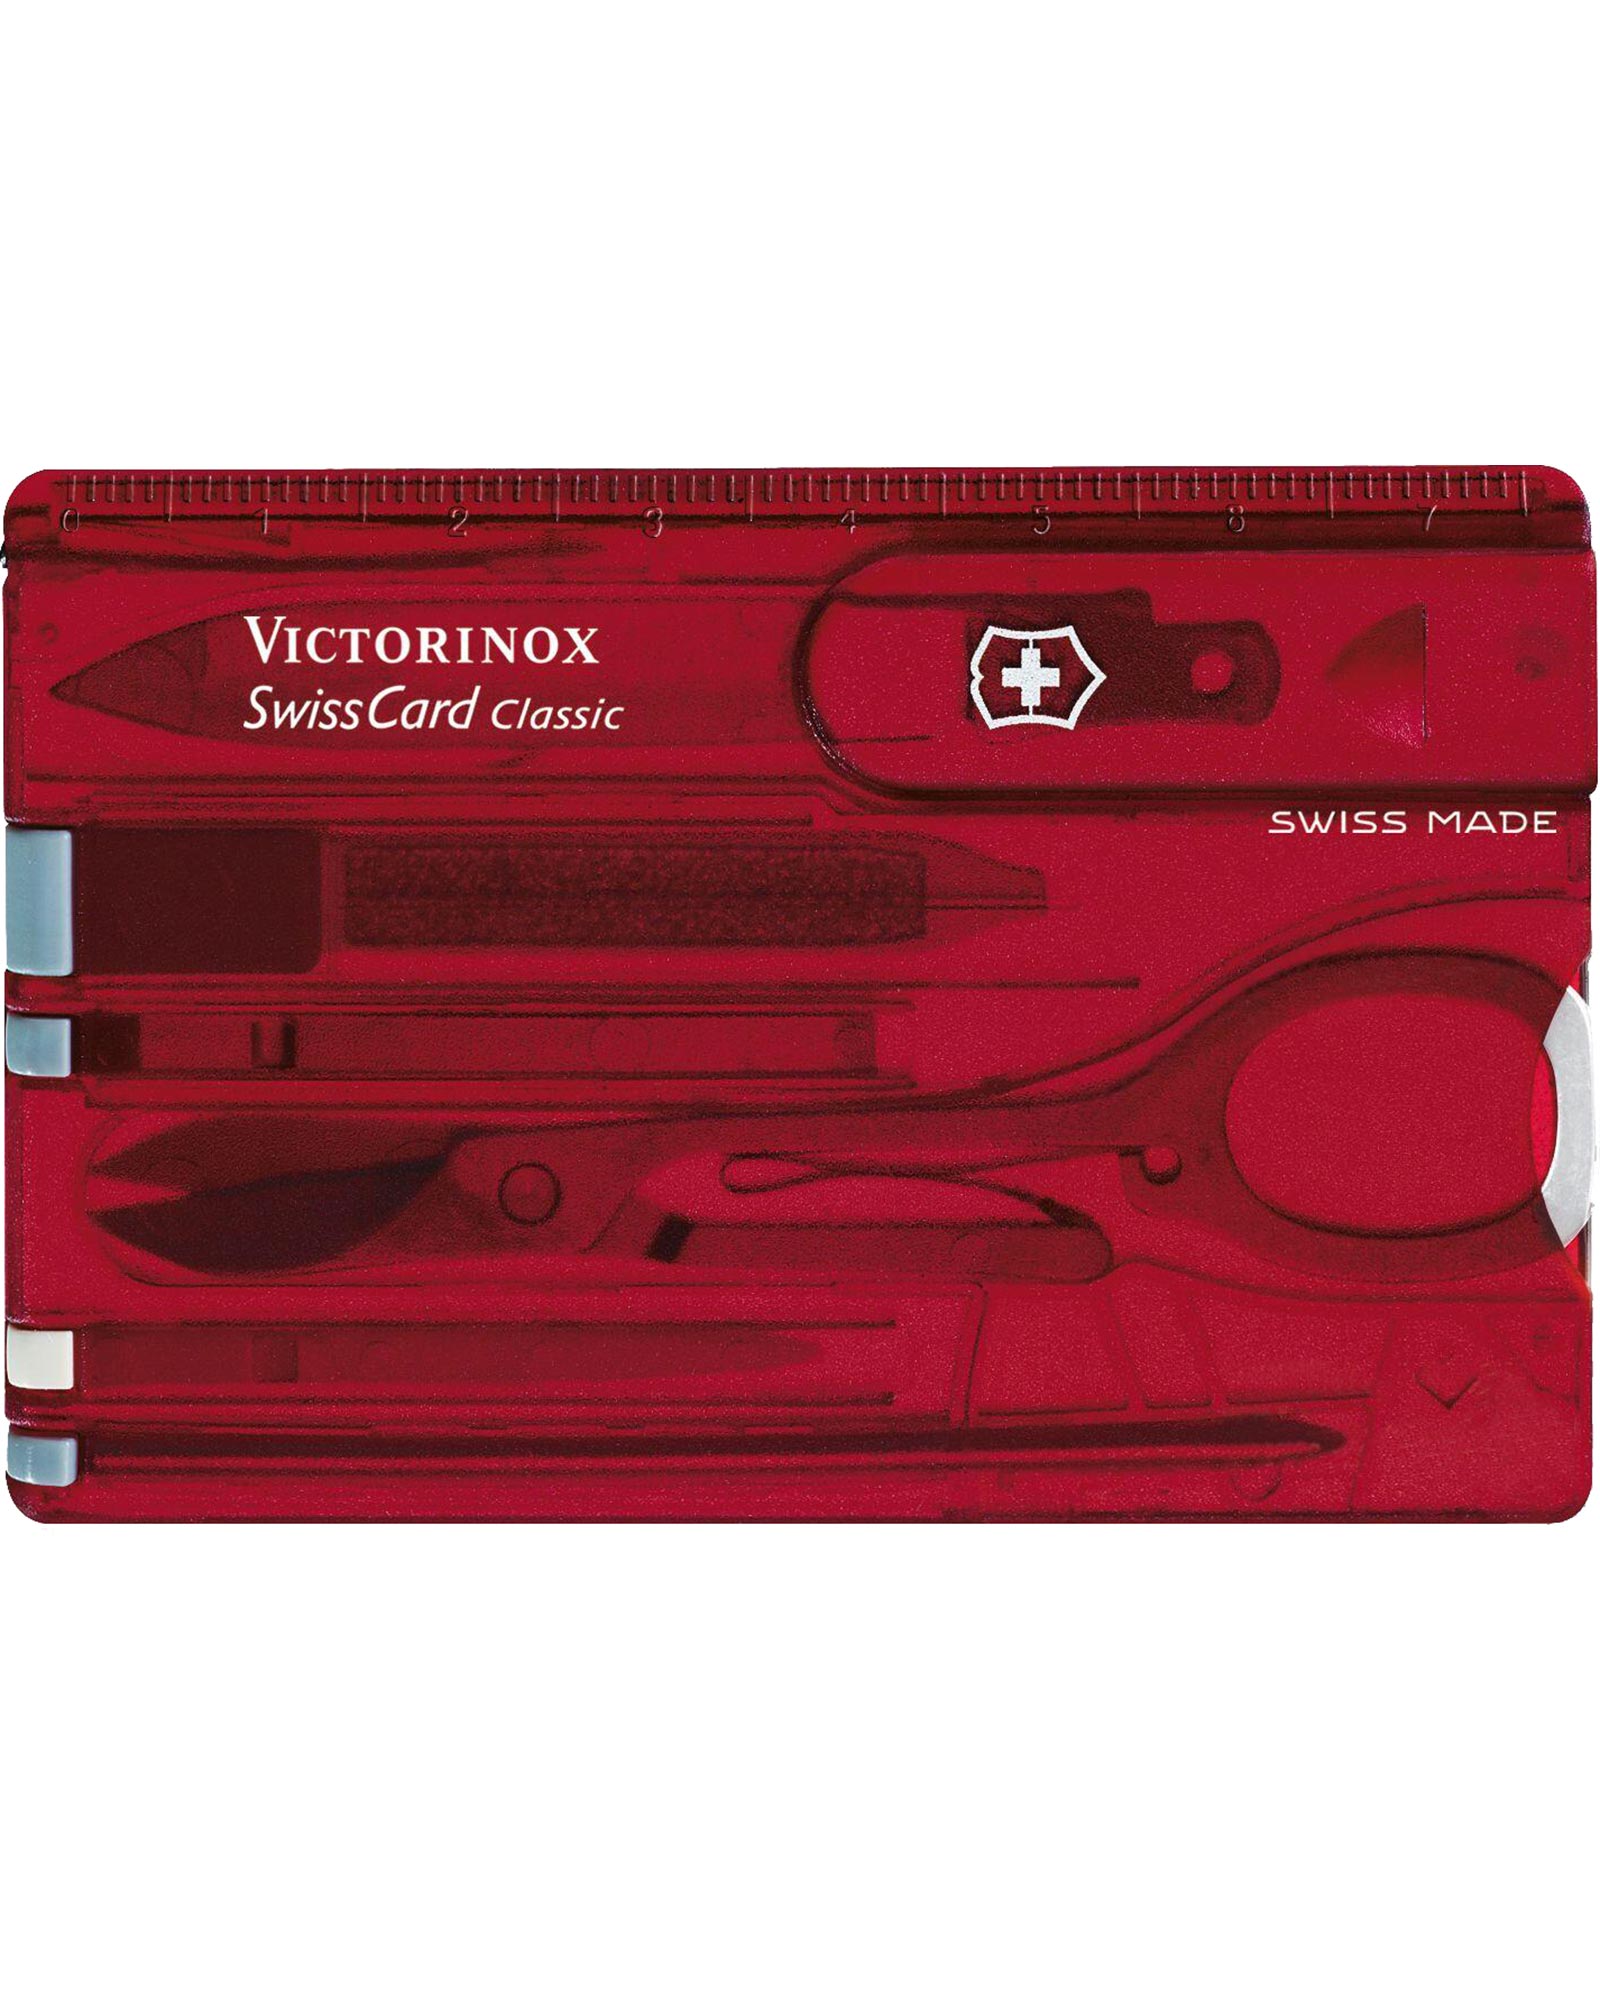 Victorinox Jelly Swiss Card - Red Trasparent